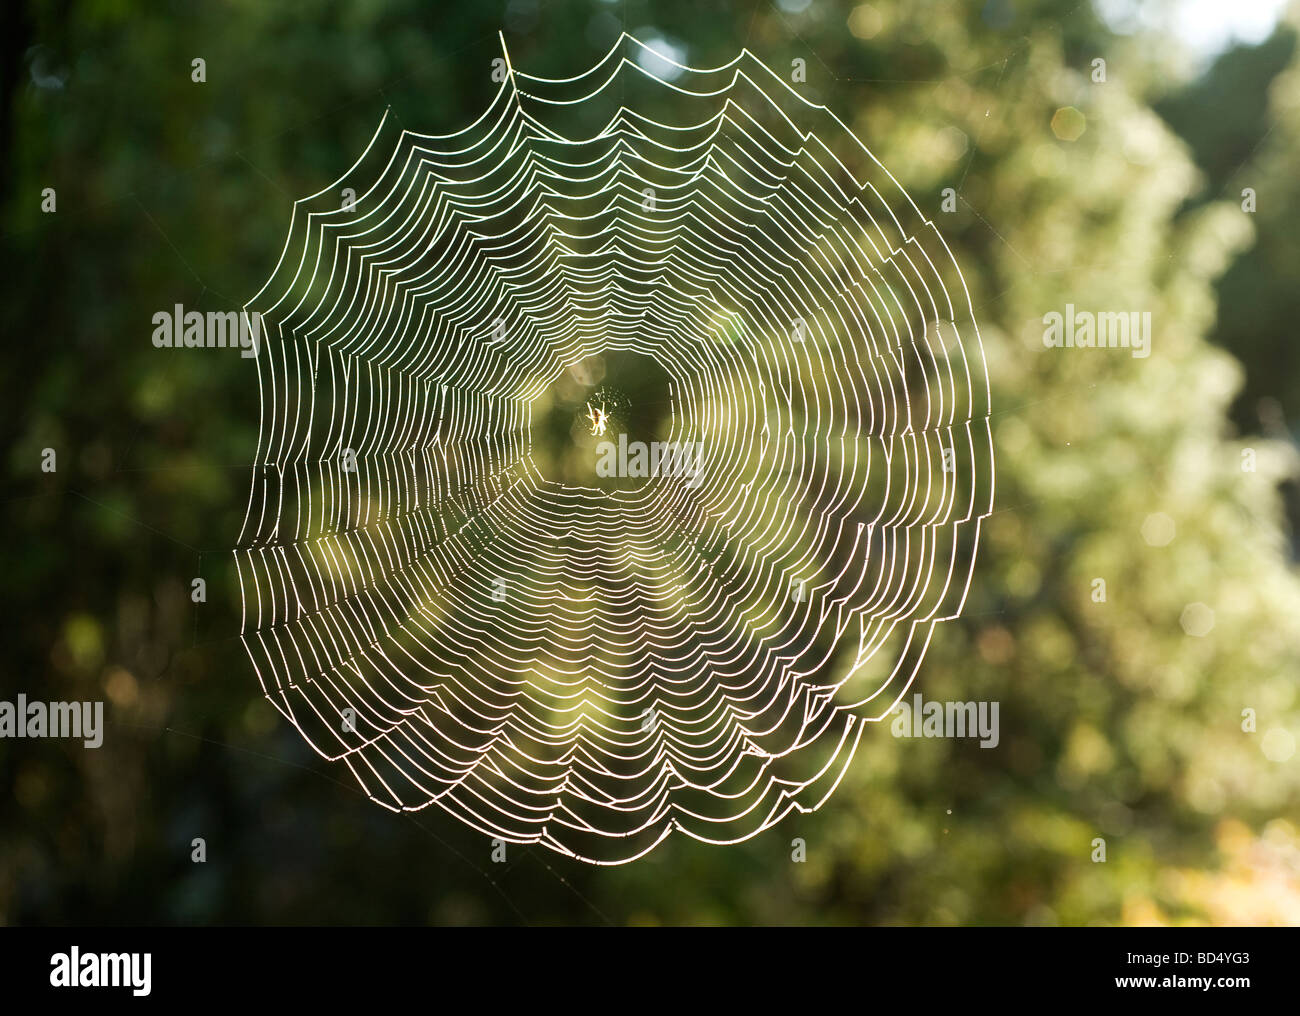 Spider web, Sweden Stock Photo